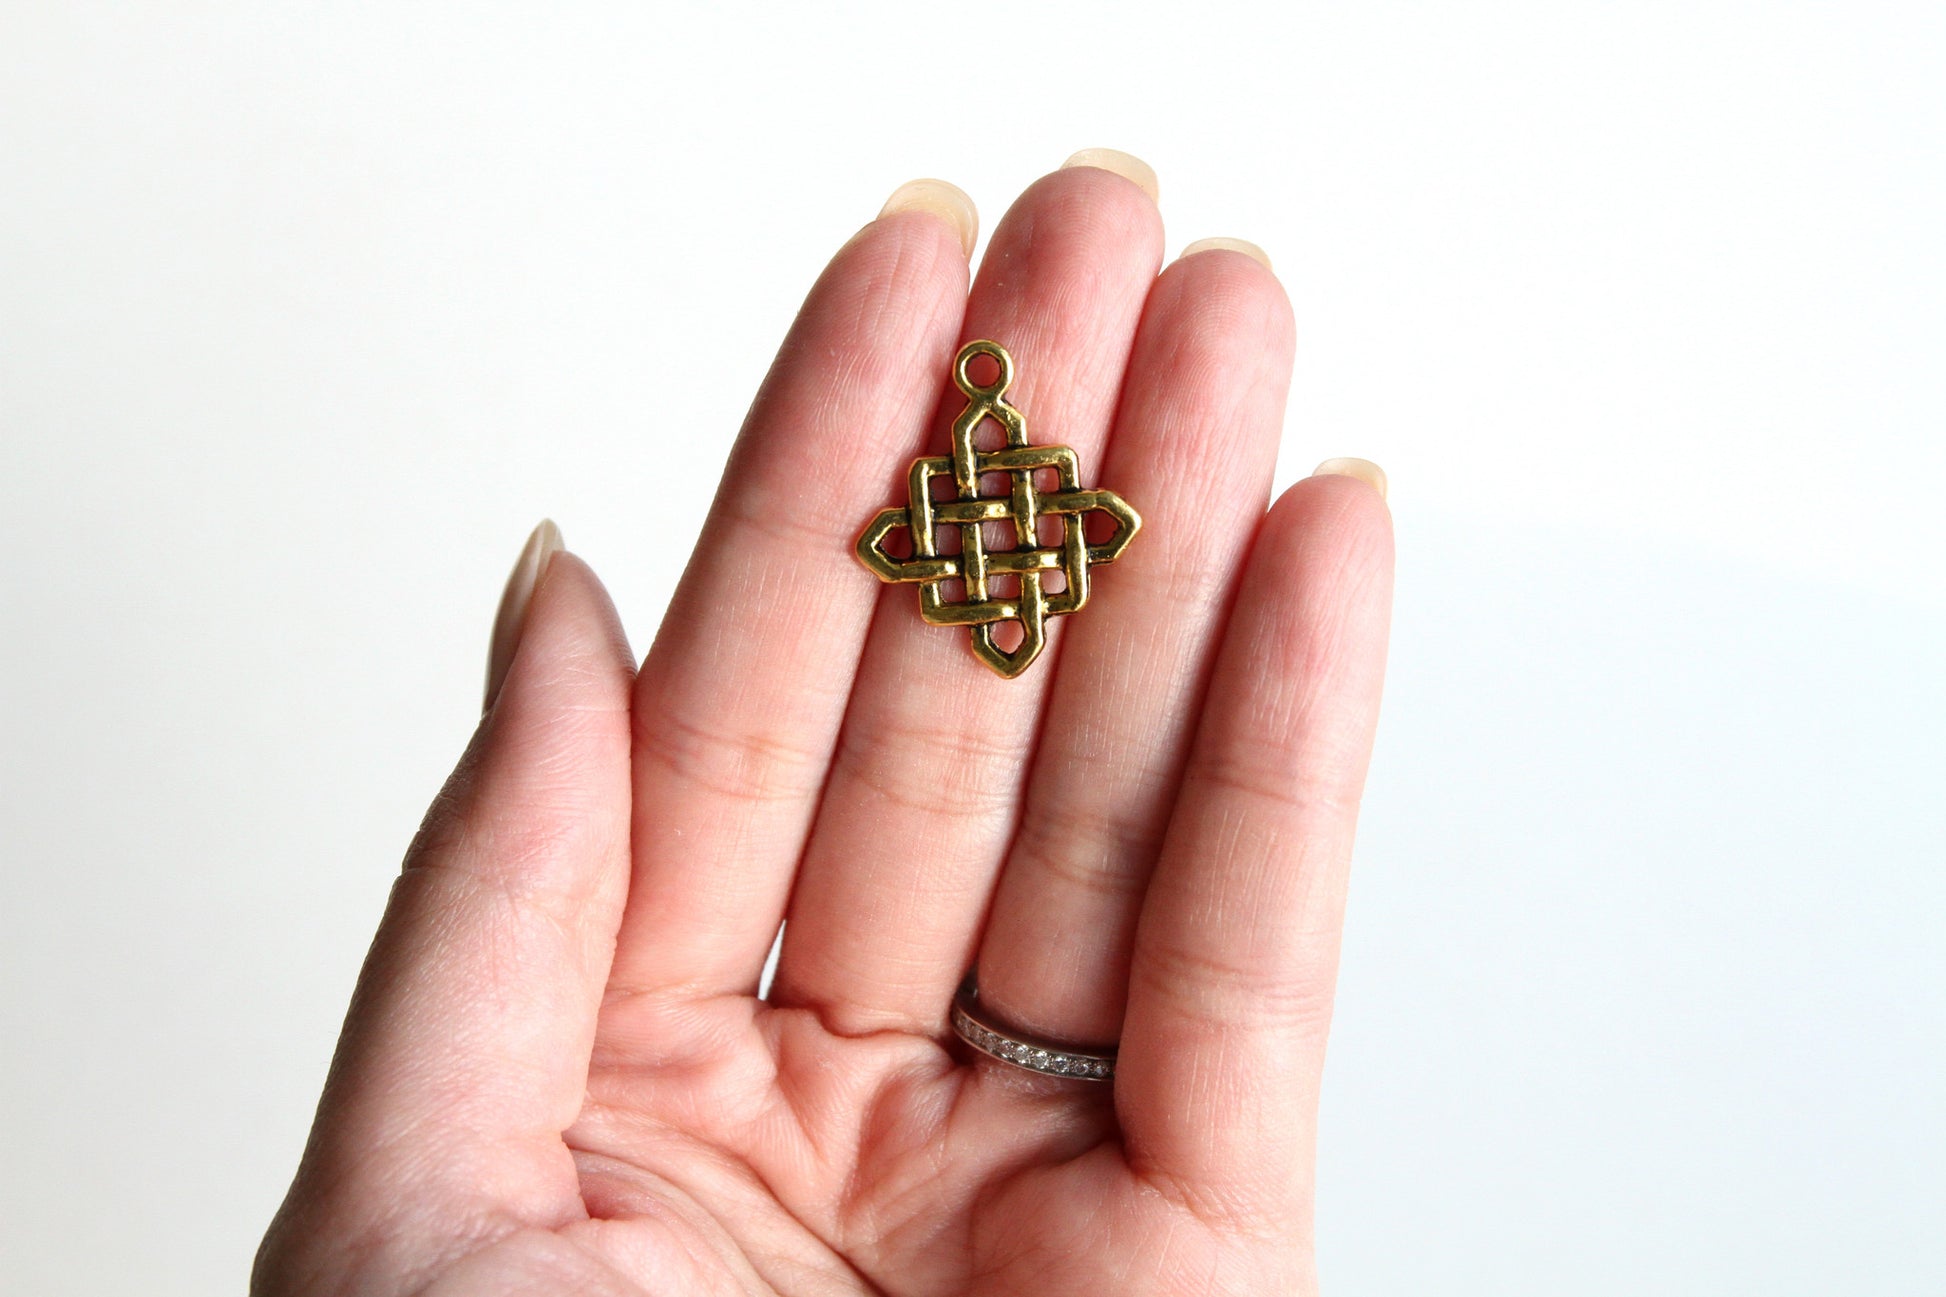 Charm - Chinese Knotting, Antique Gold - KEY Handmade
 - 2